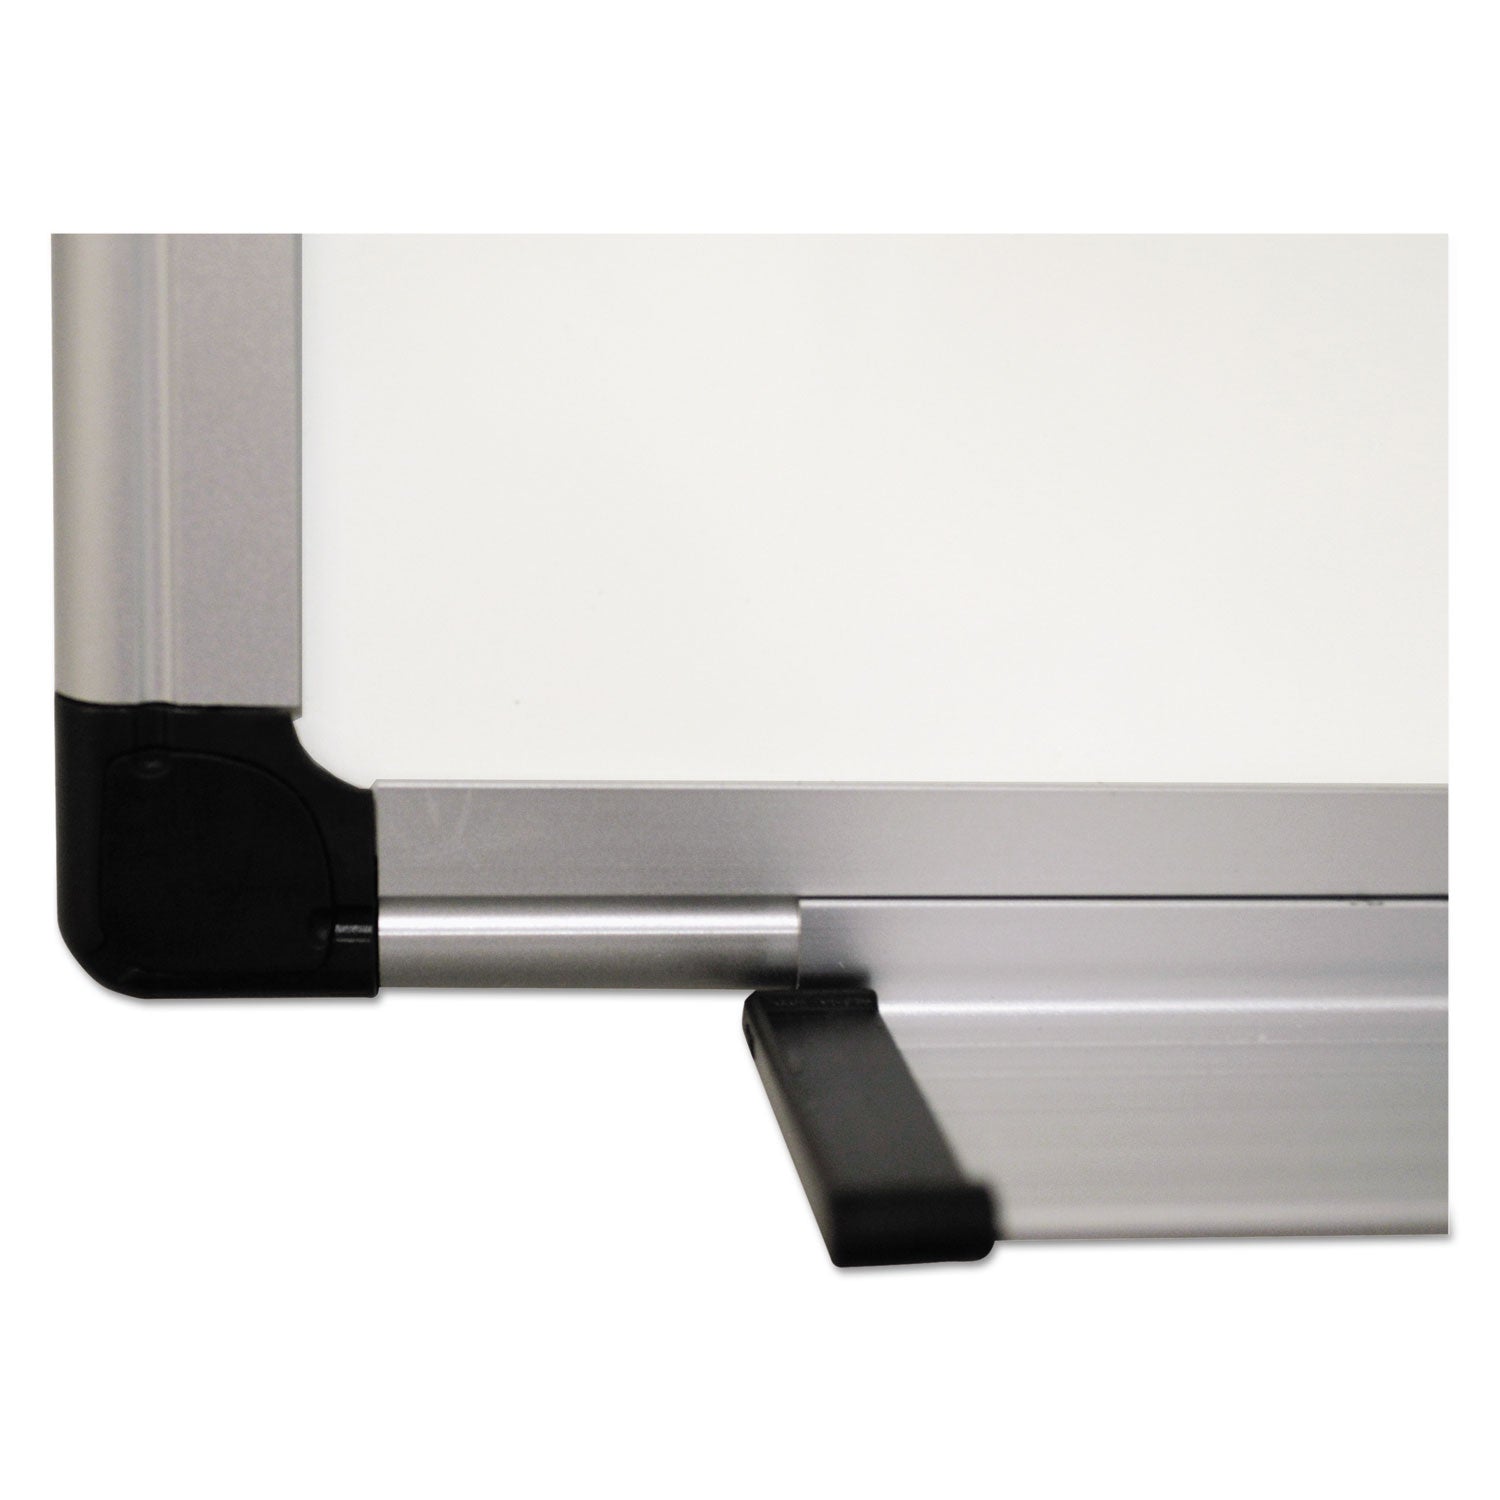 Porcelain Value Dry Erase Board, 24 x 36, White Surface, Silver Aluminum Frame - 